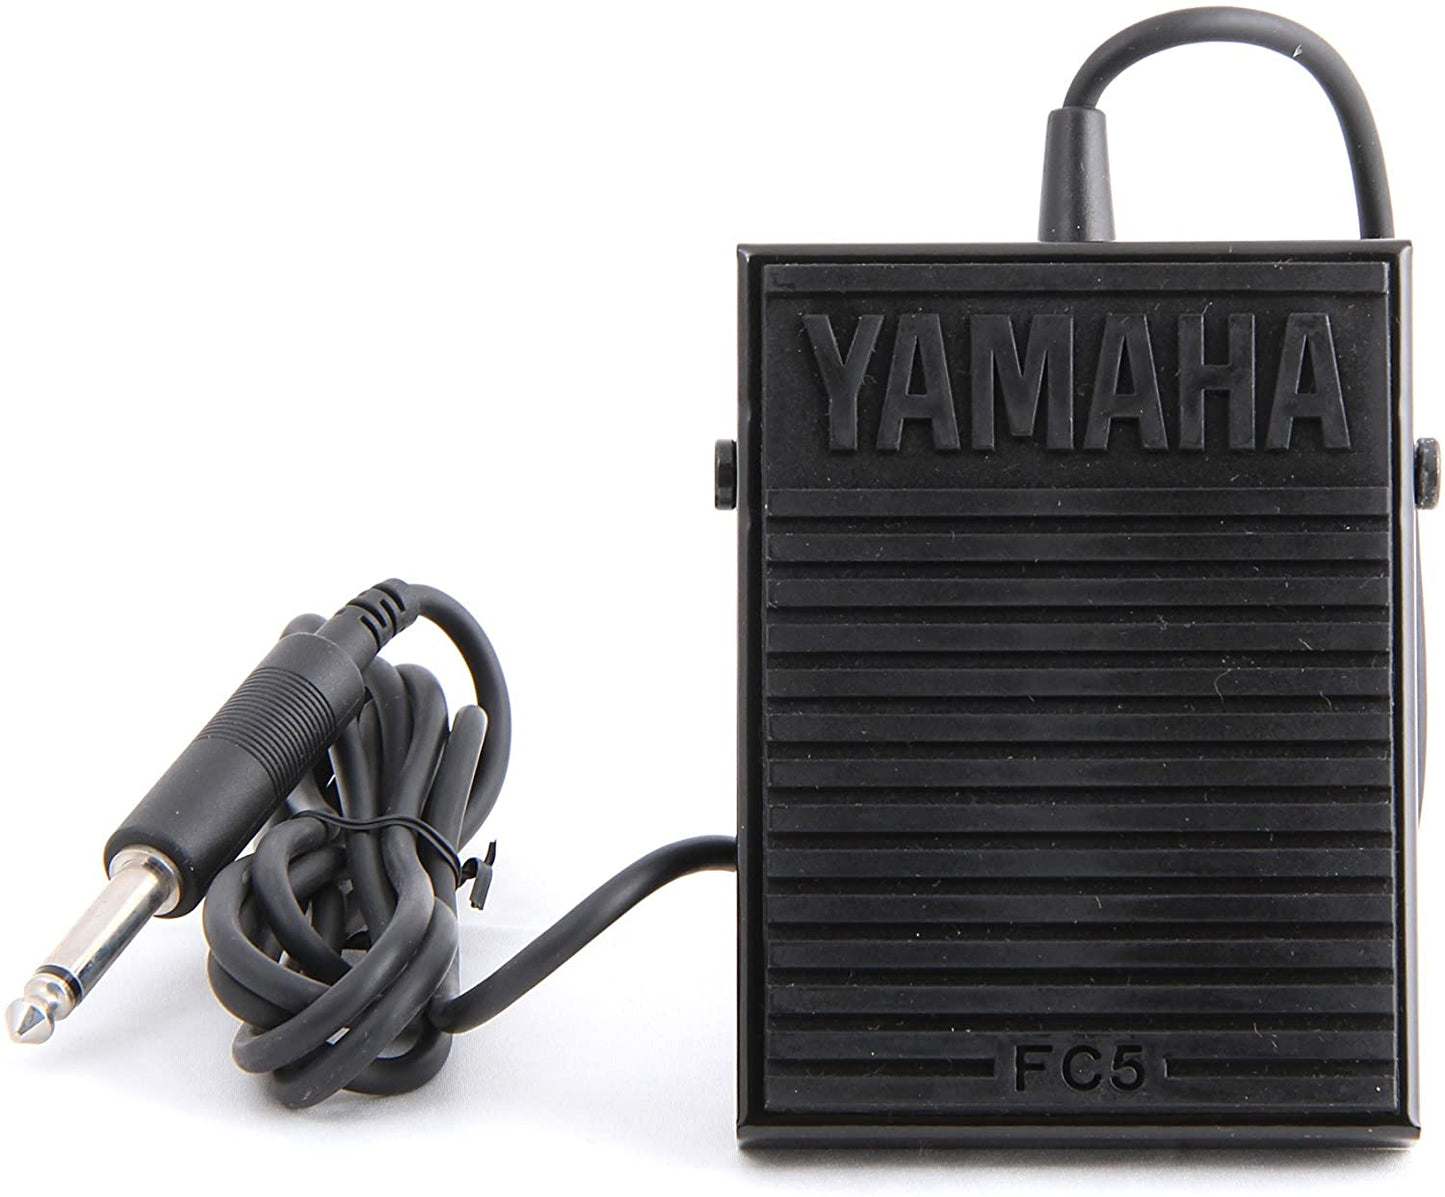 YAMAHA FC5 Foot Switch Controller